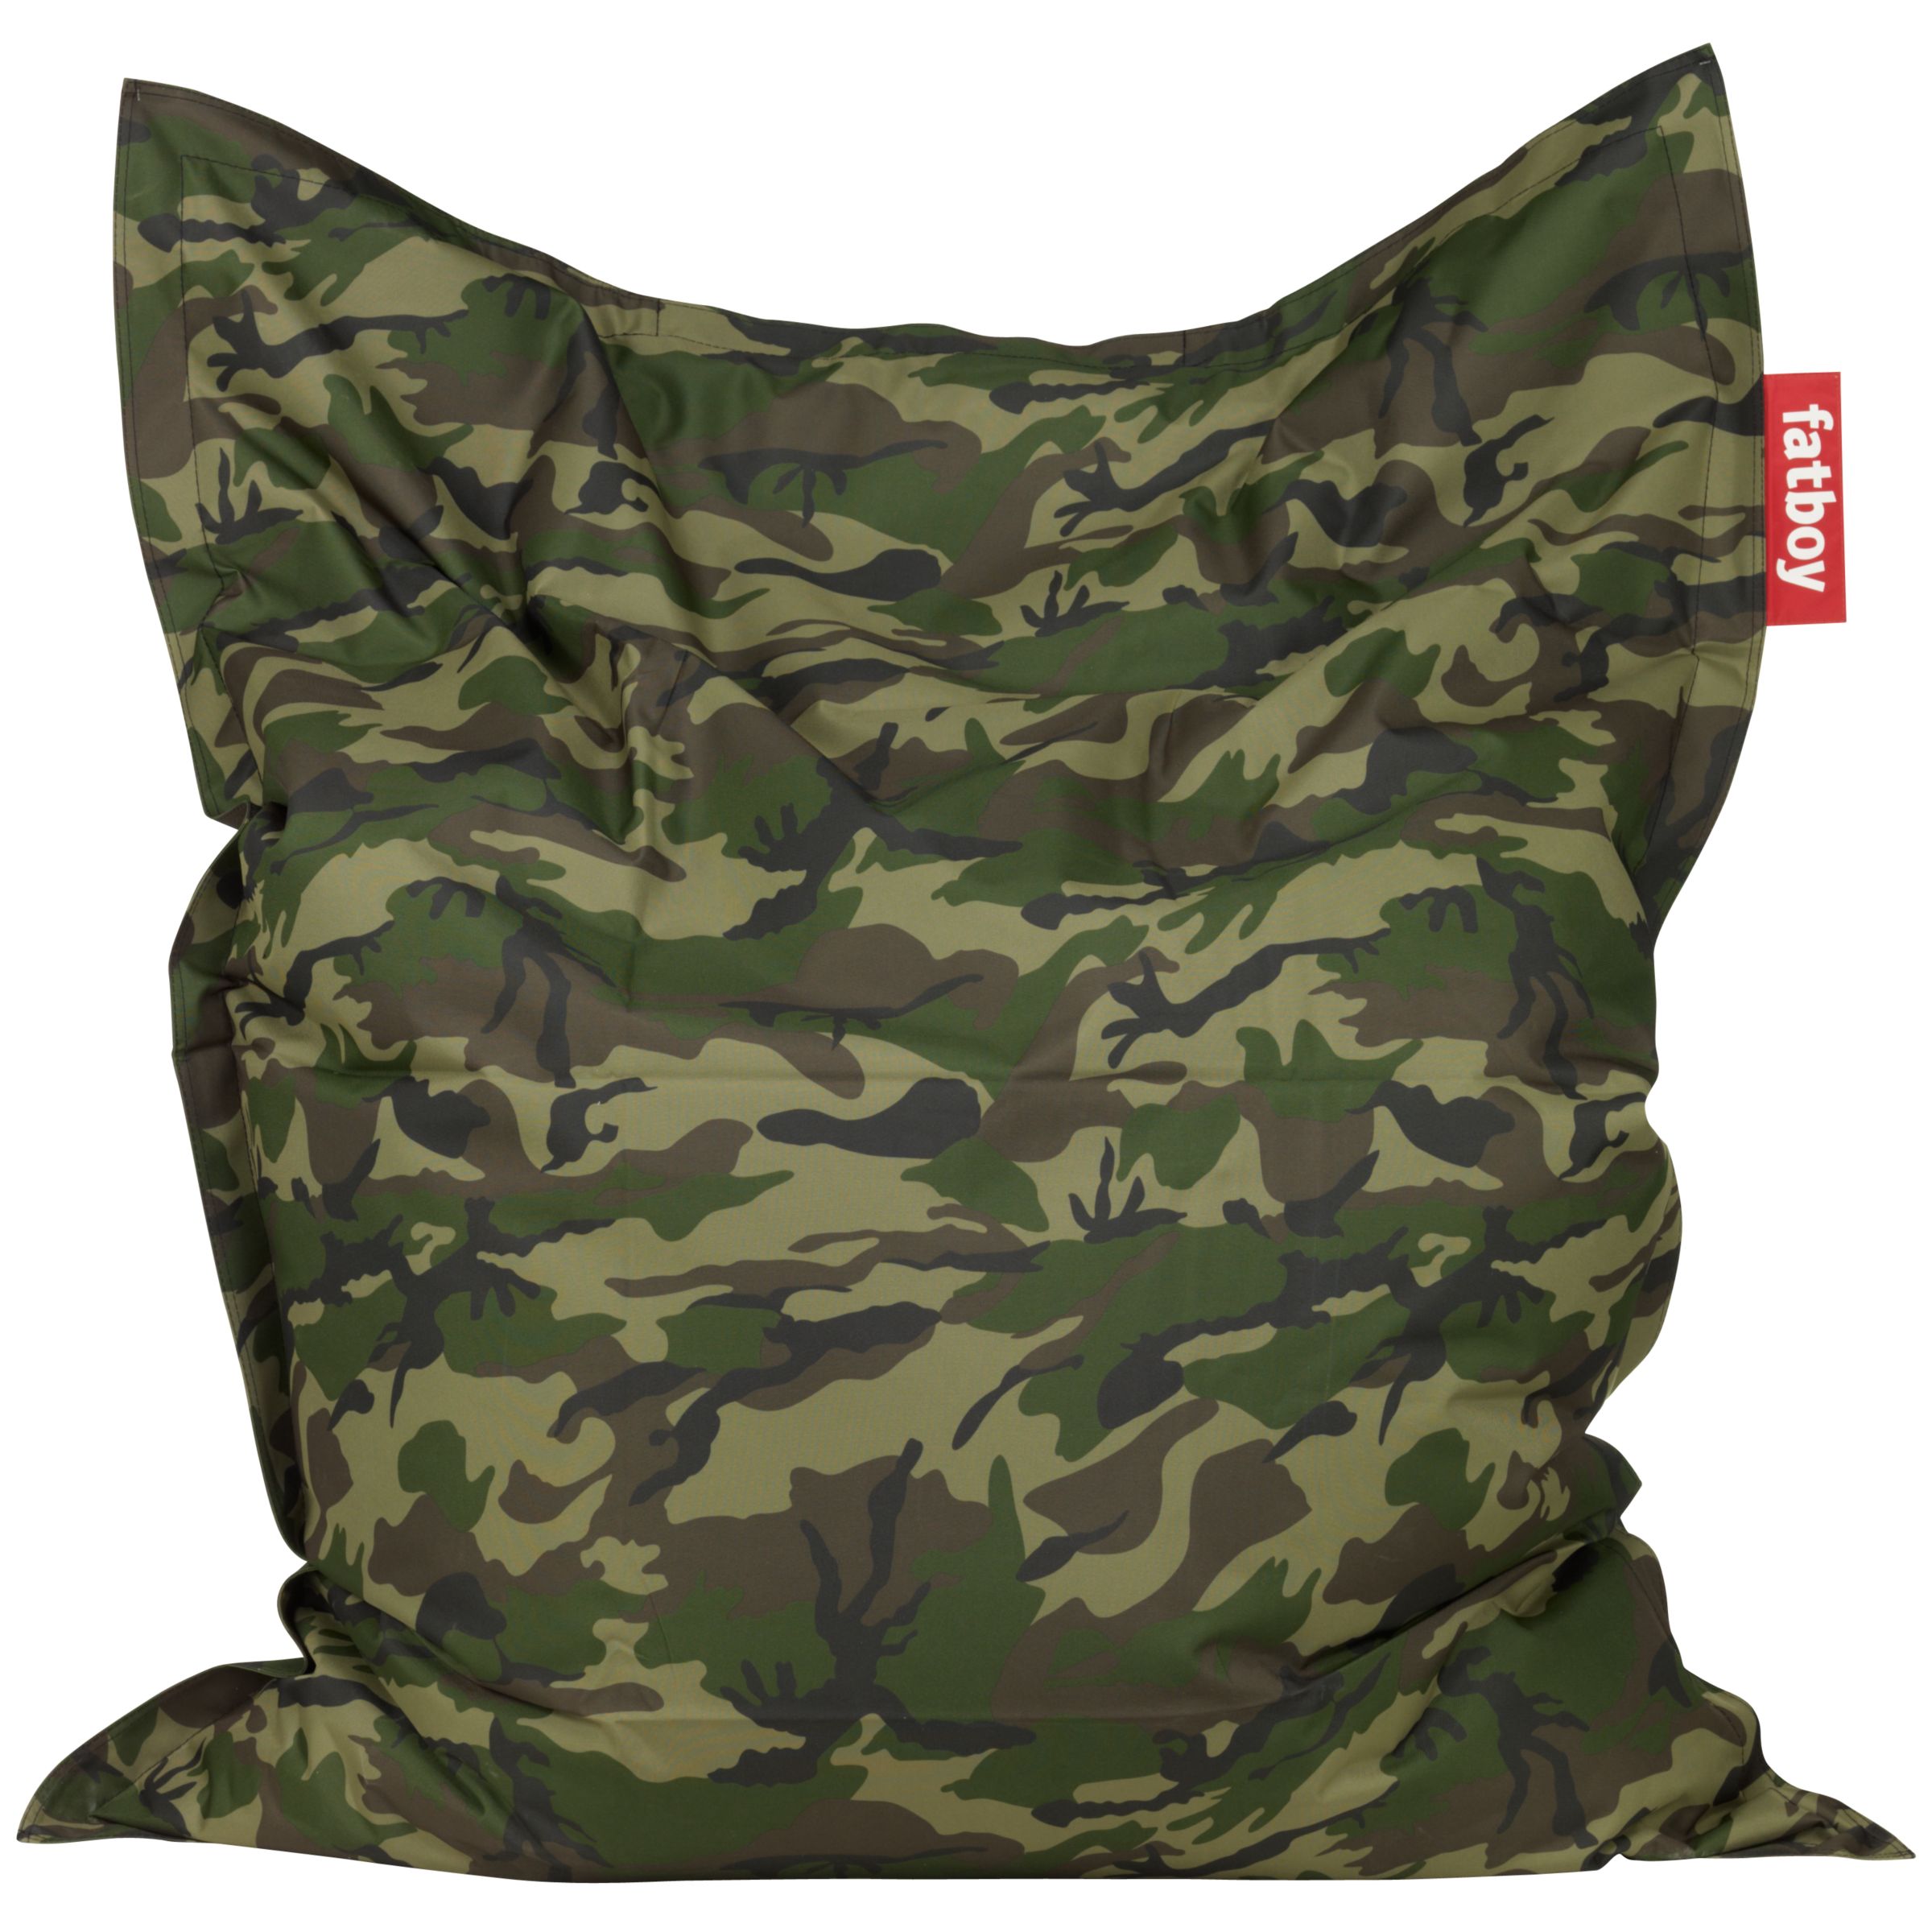 Fat Boy Bean Bag, Camouflage